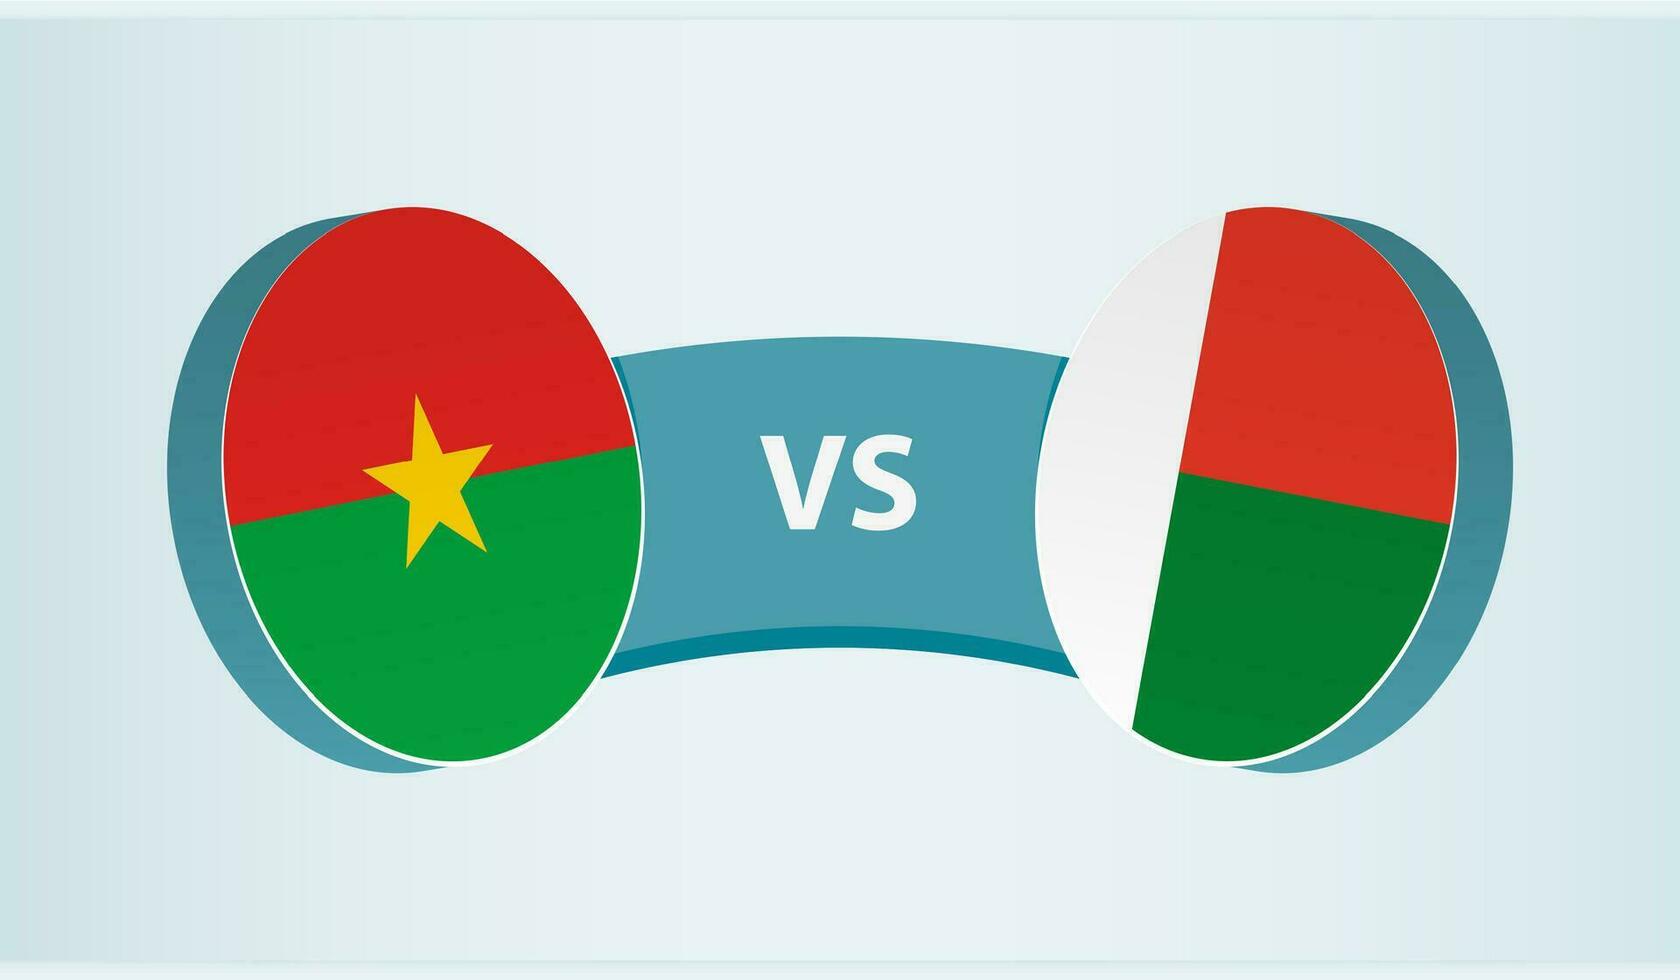 Burkina Faso versus Madagascar, team sports competition concept. vector